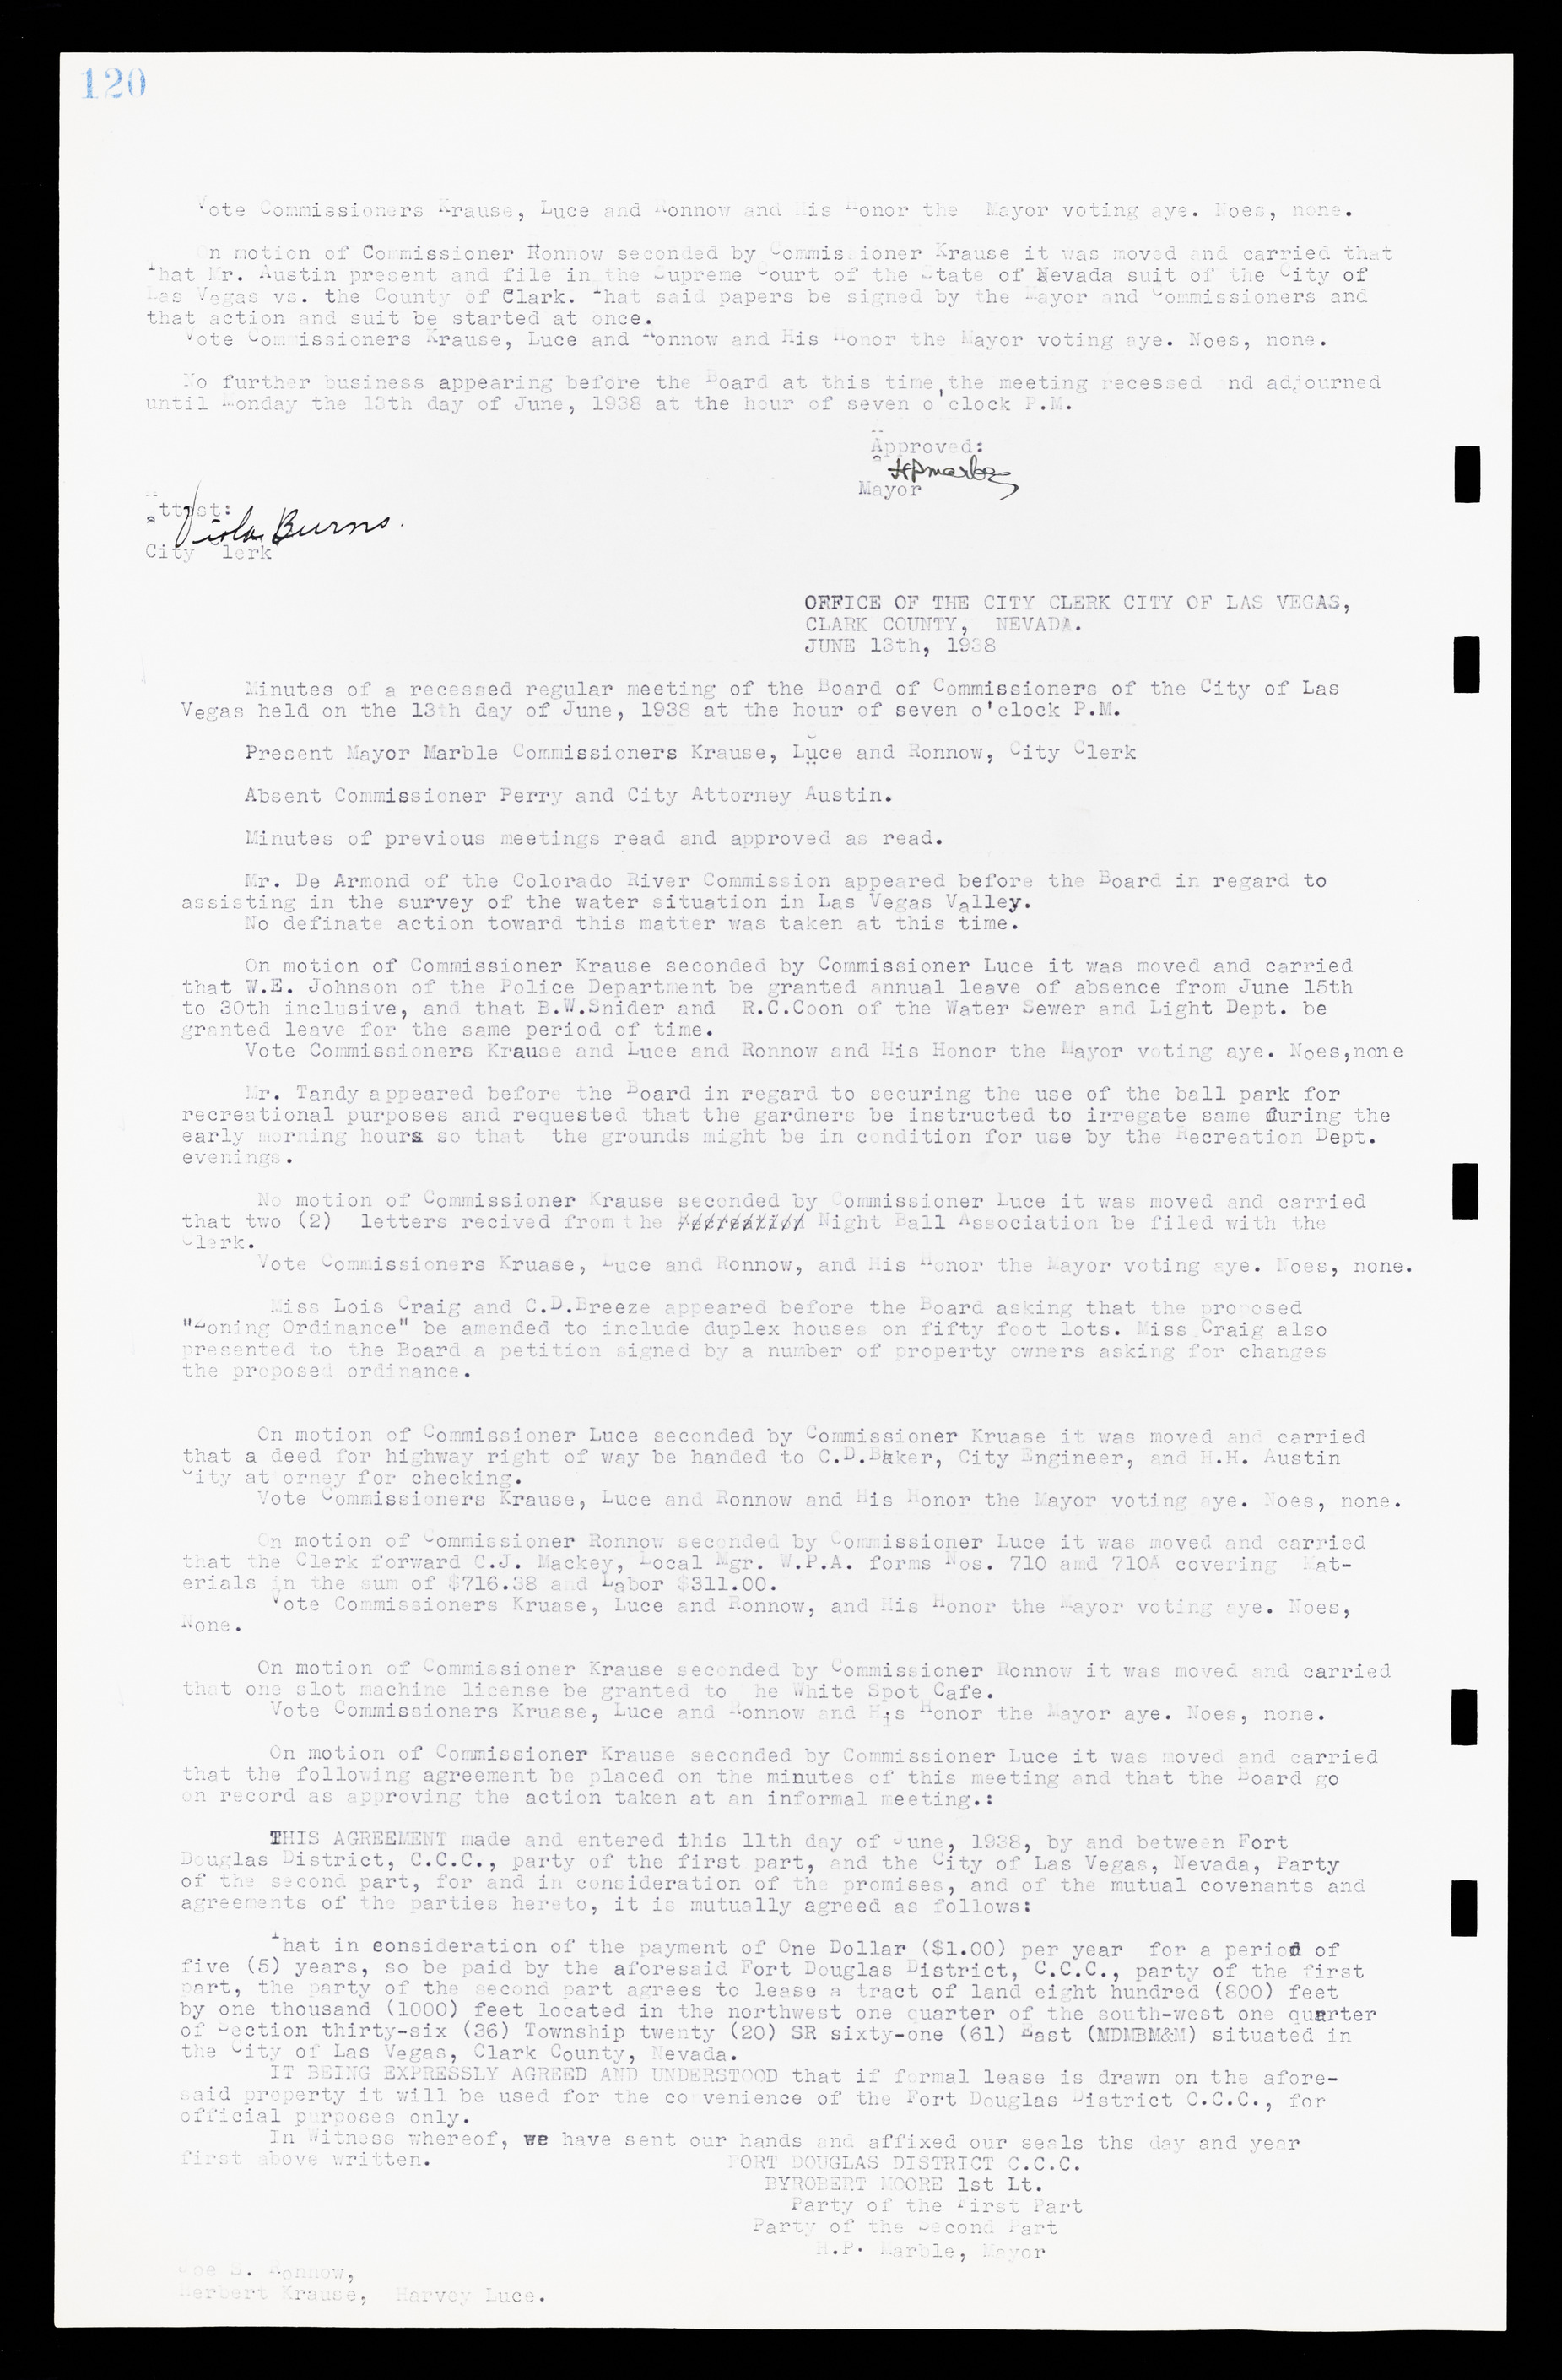 Las Vegas City Commission Minutes, February 17, 1937 to August 4, 1942, lvc000004-131